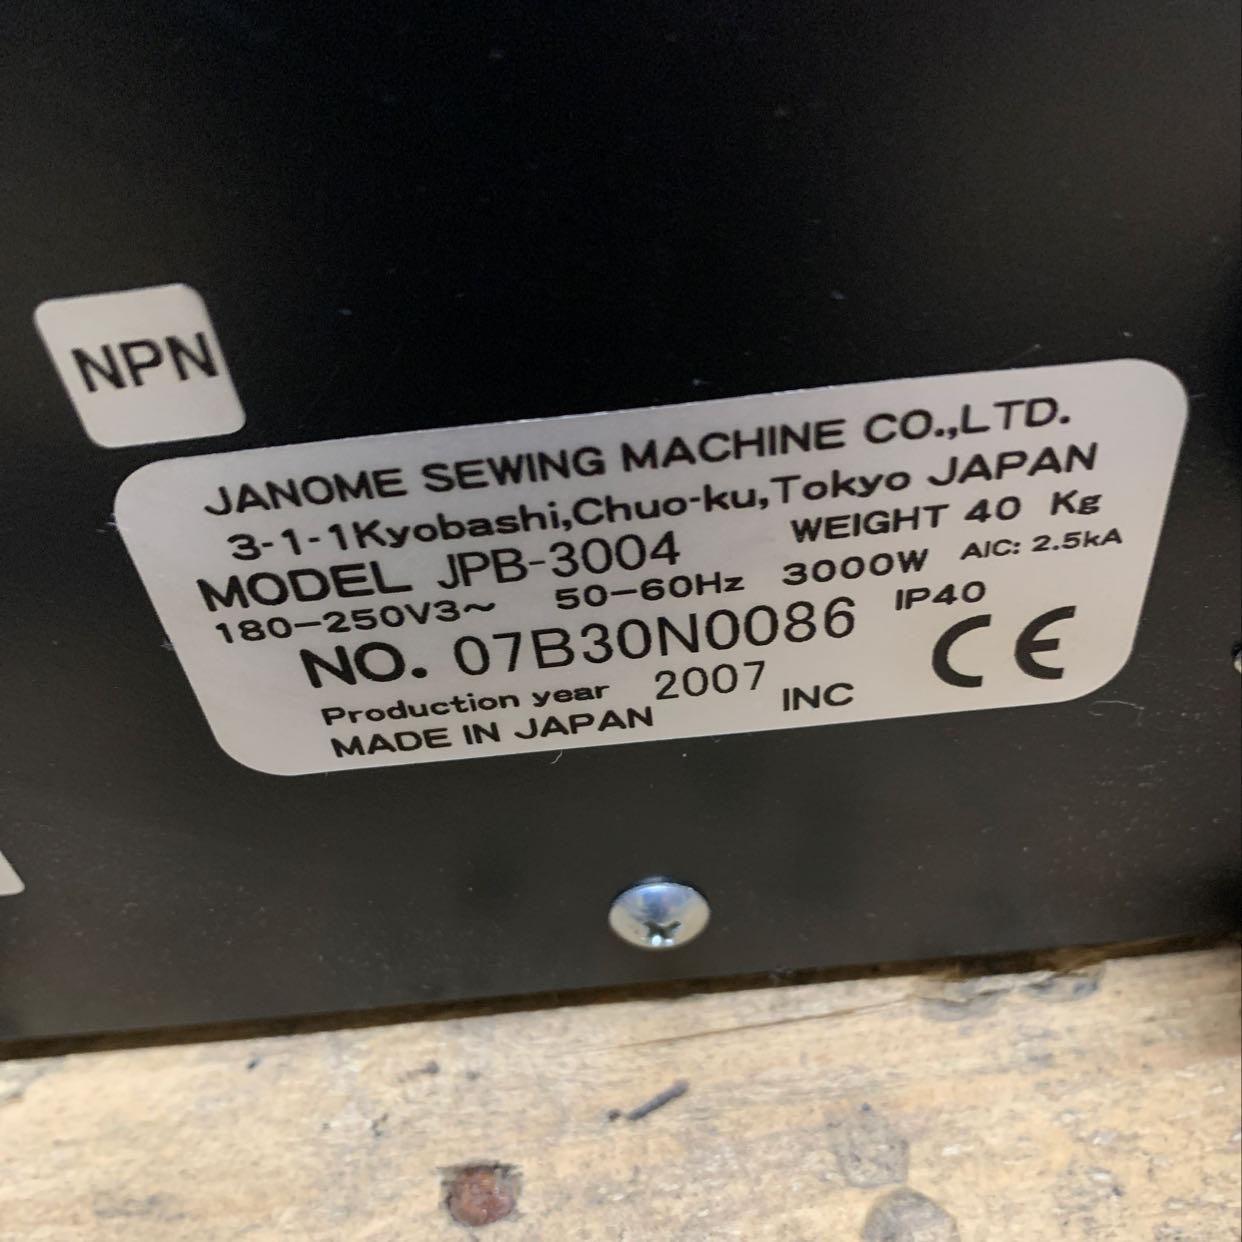  Janome JPU-3004/ JPB-3004 Servo Press 30kN 240V 3-Phase 